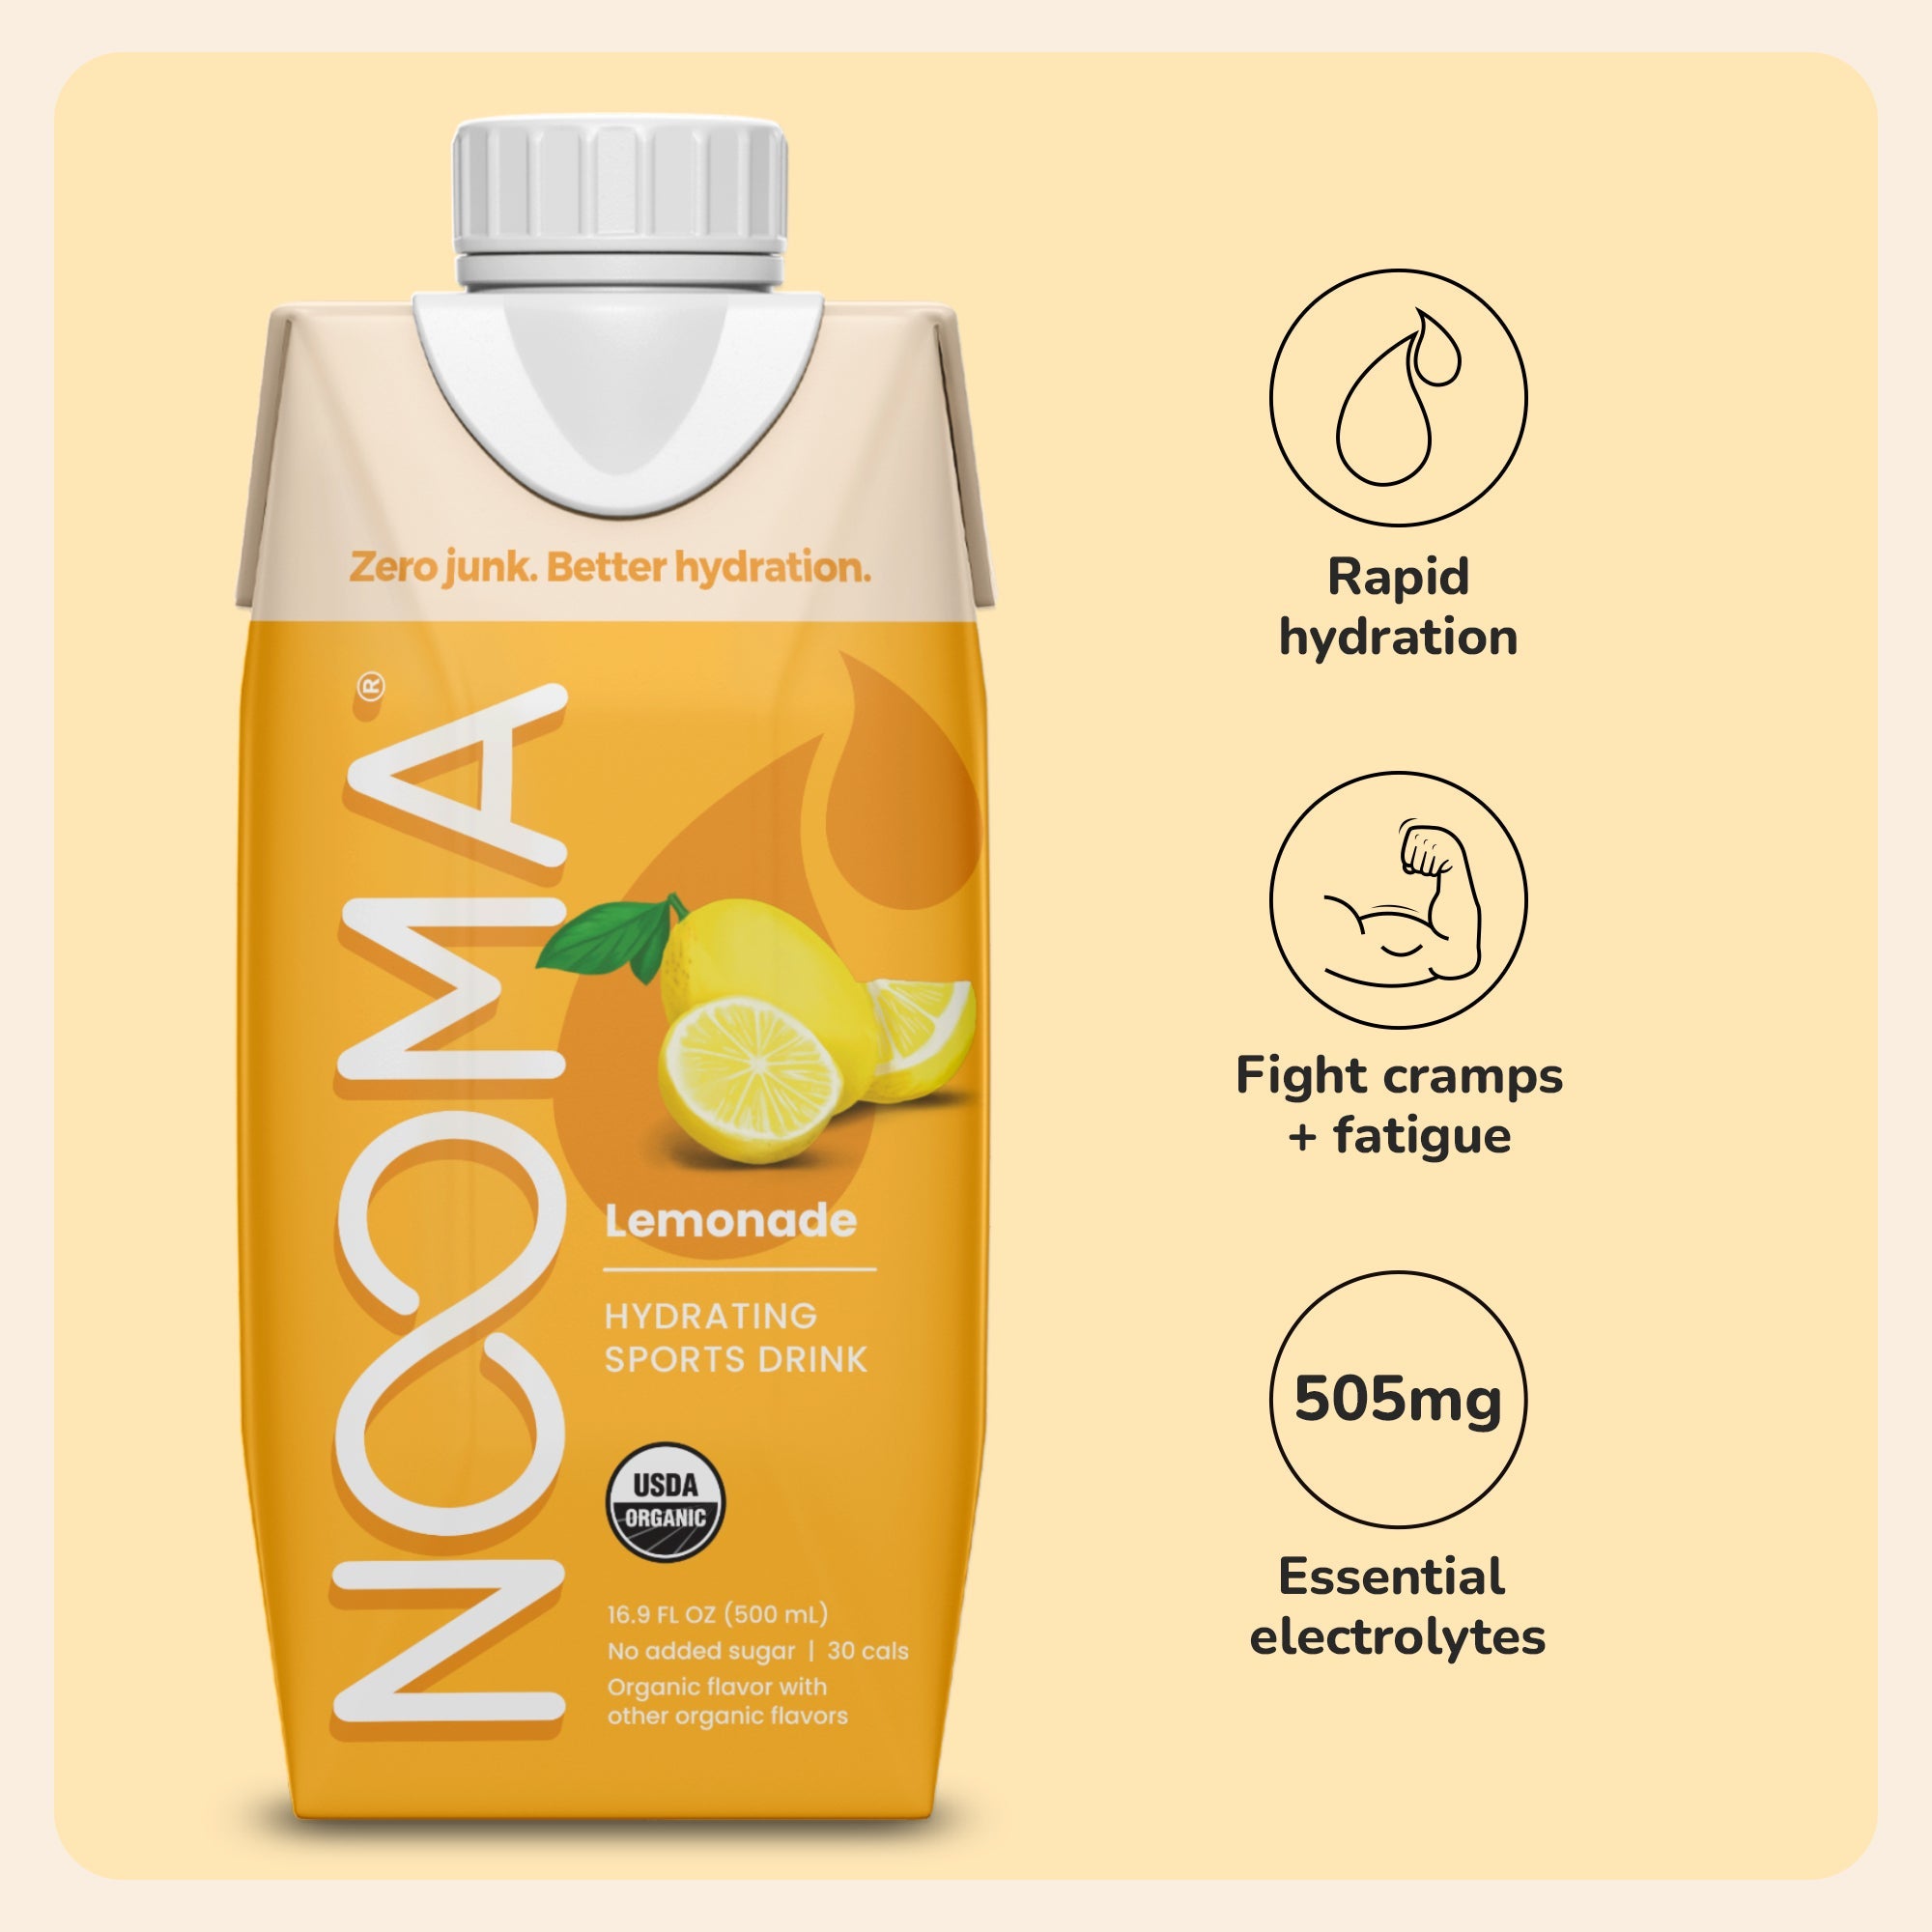 Nooma Hydration Lemonade